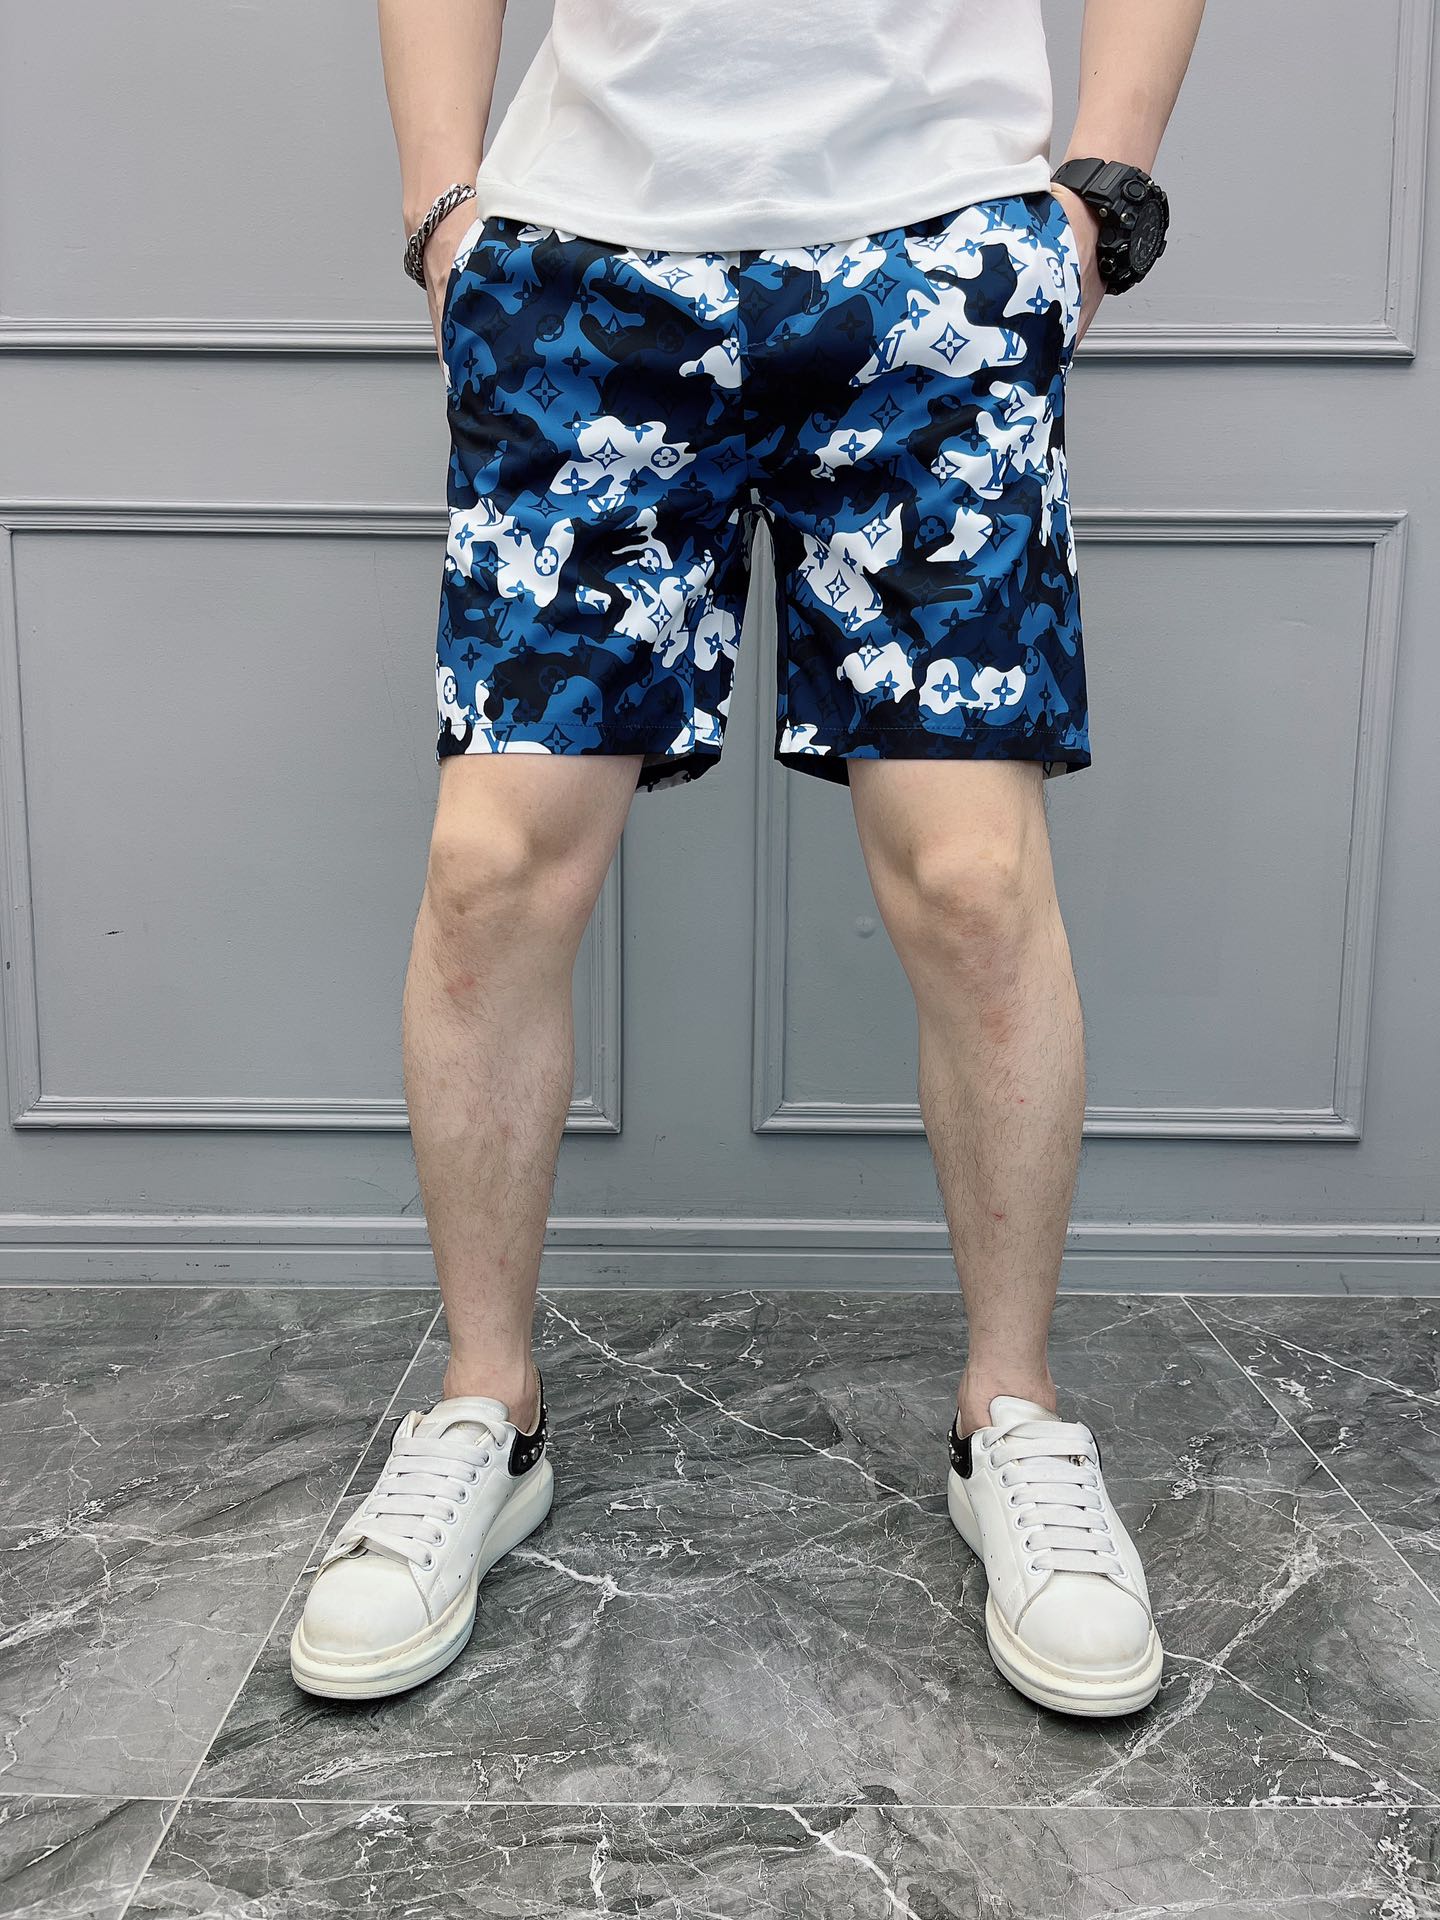 Louis Vuitton Clothing Shorts Printing Men Summer Collection Fashion Beach